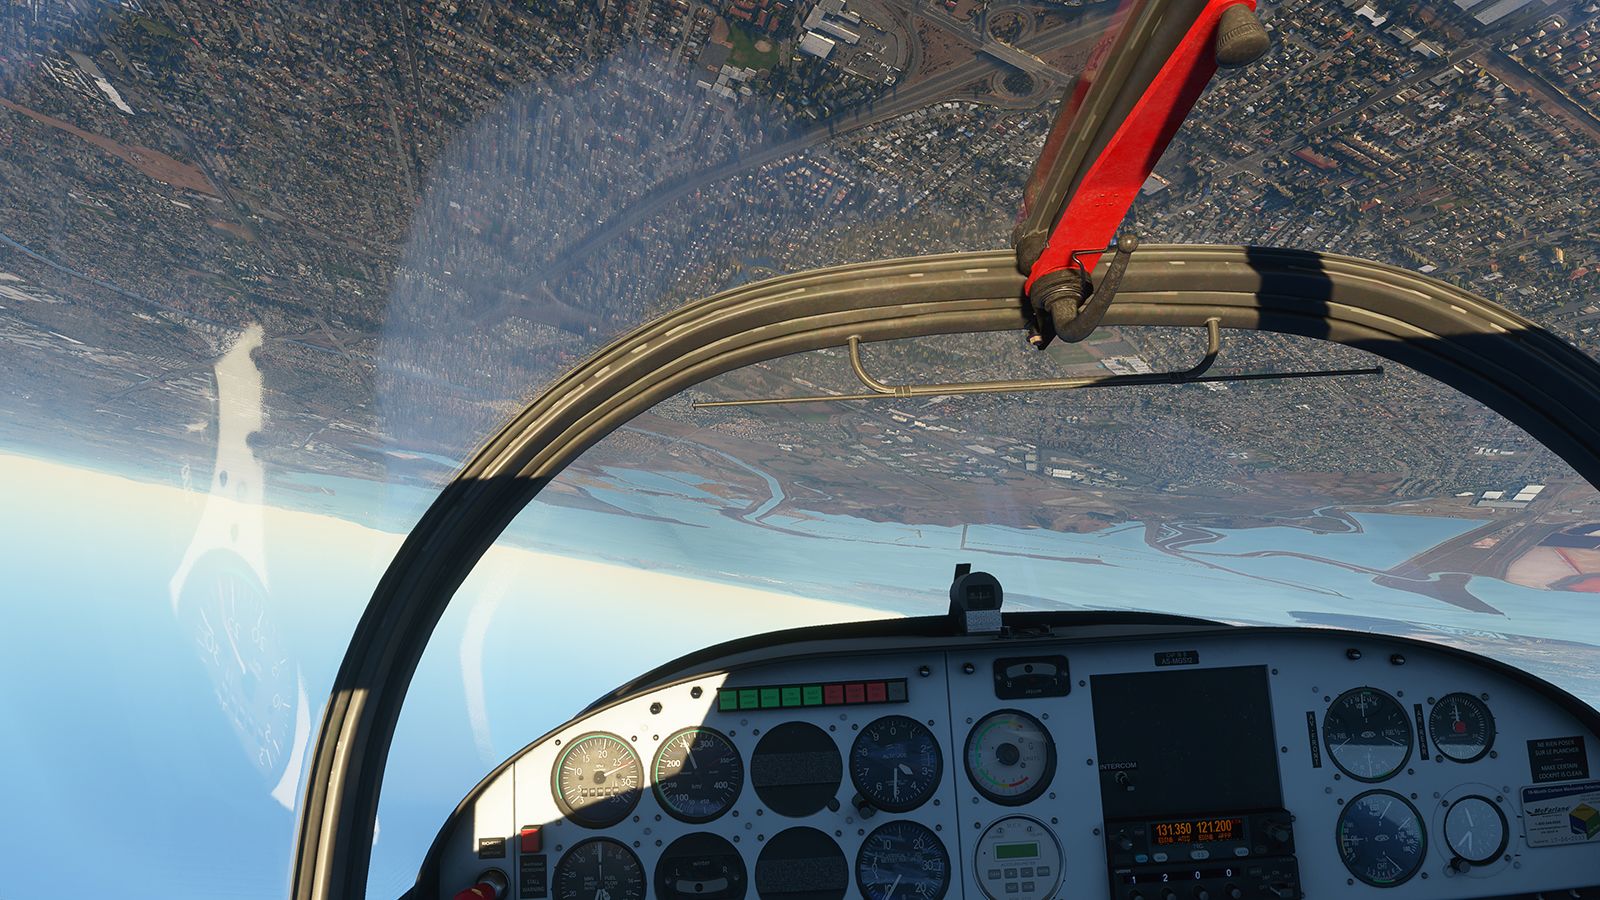 Can Microsoft Flight Simulator's 2020 reboot solve the pilot